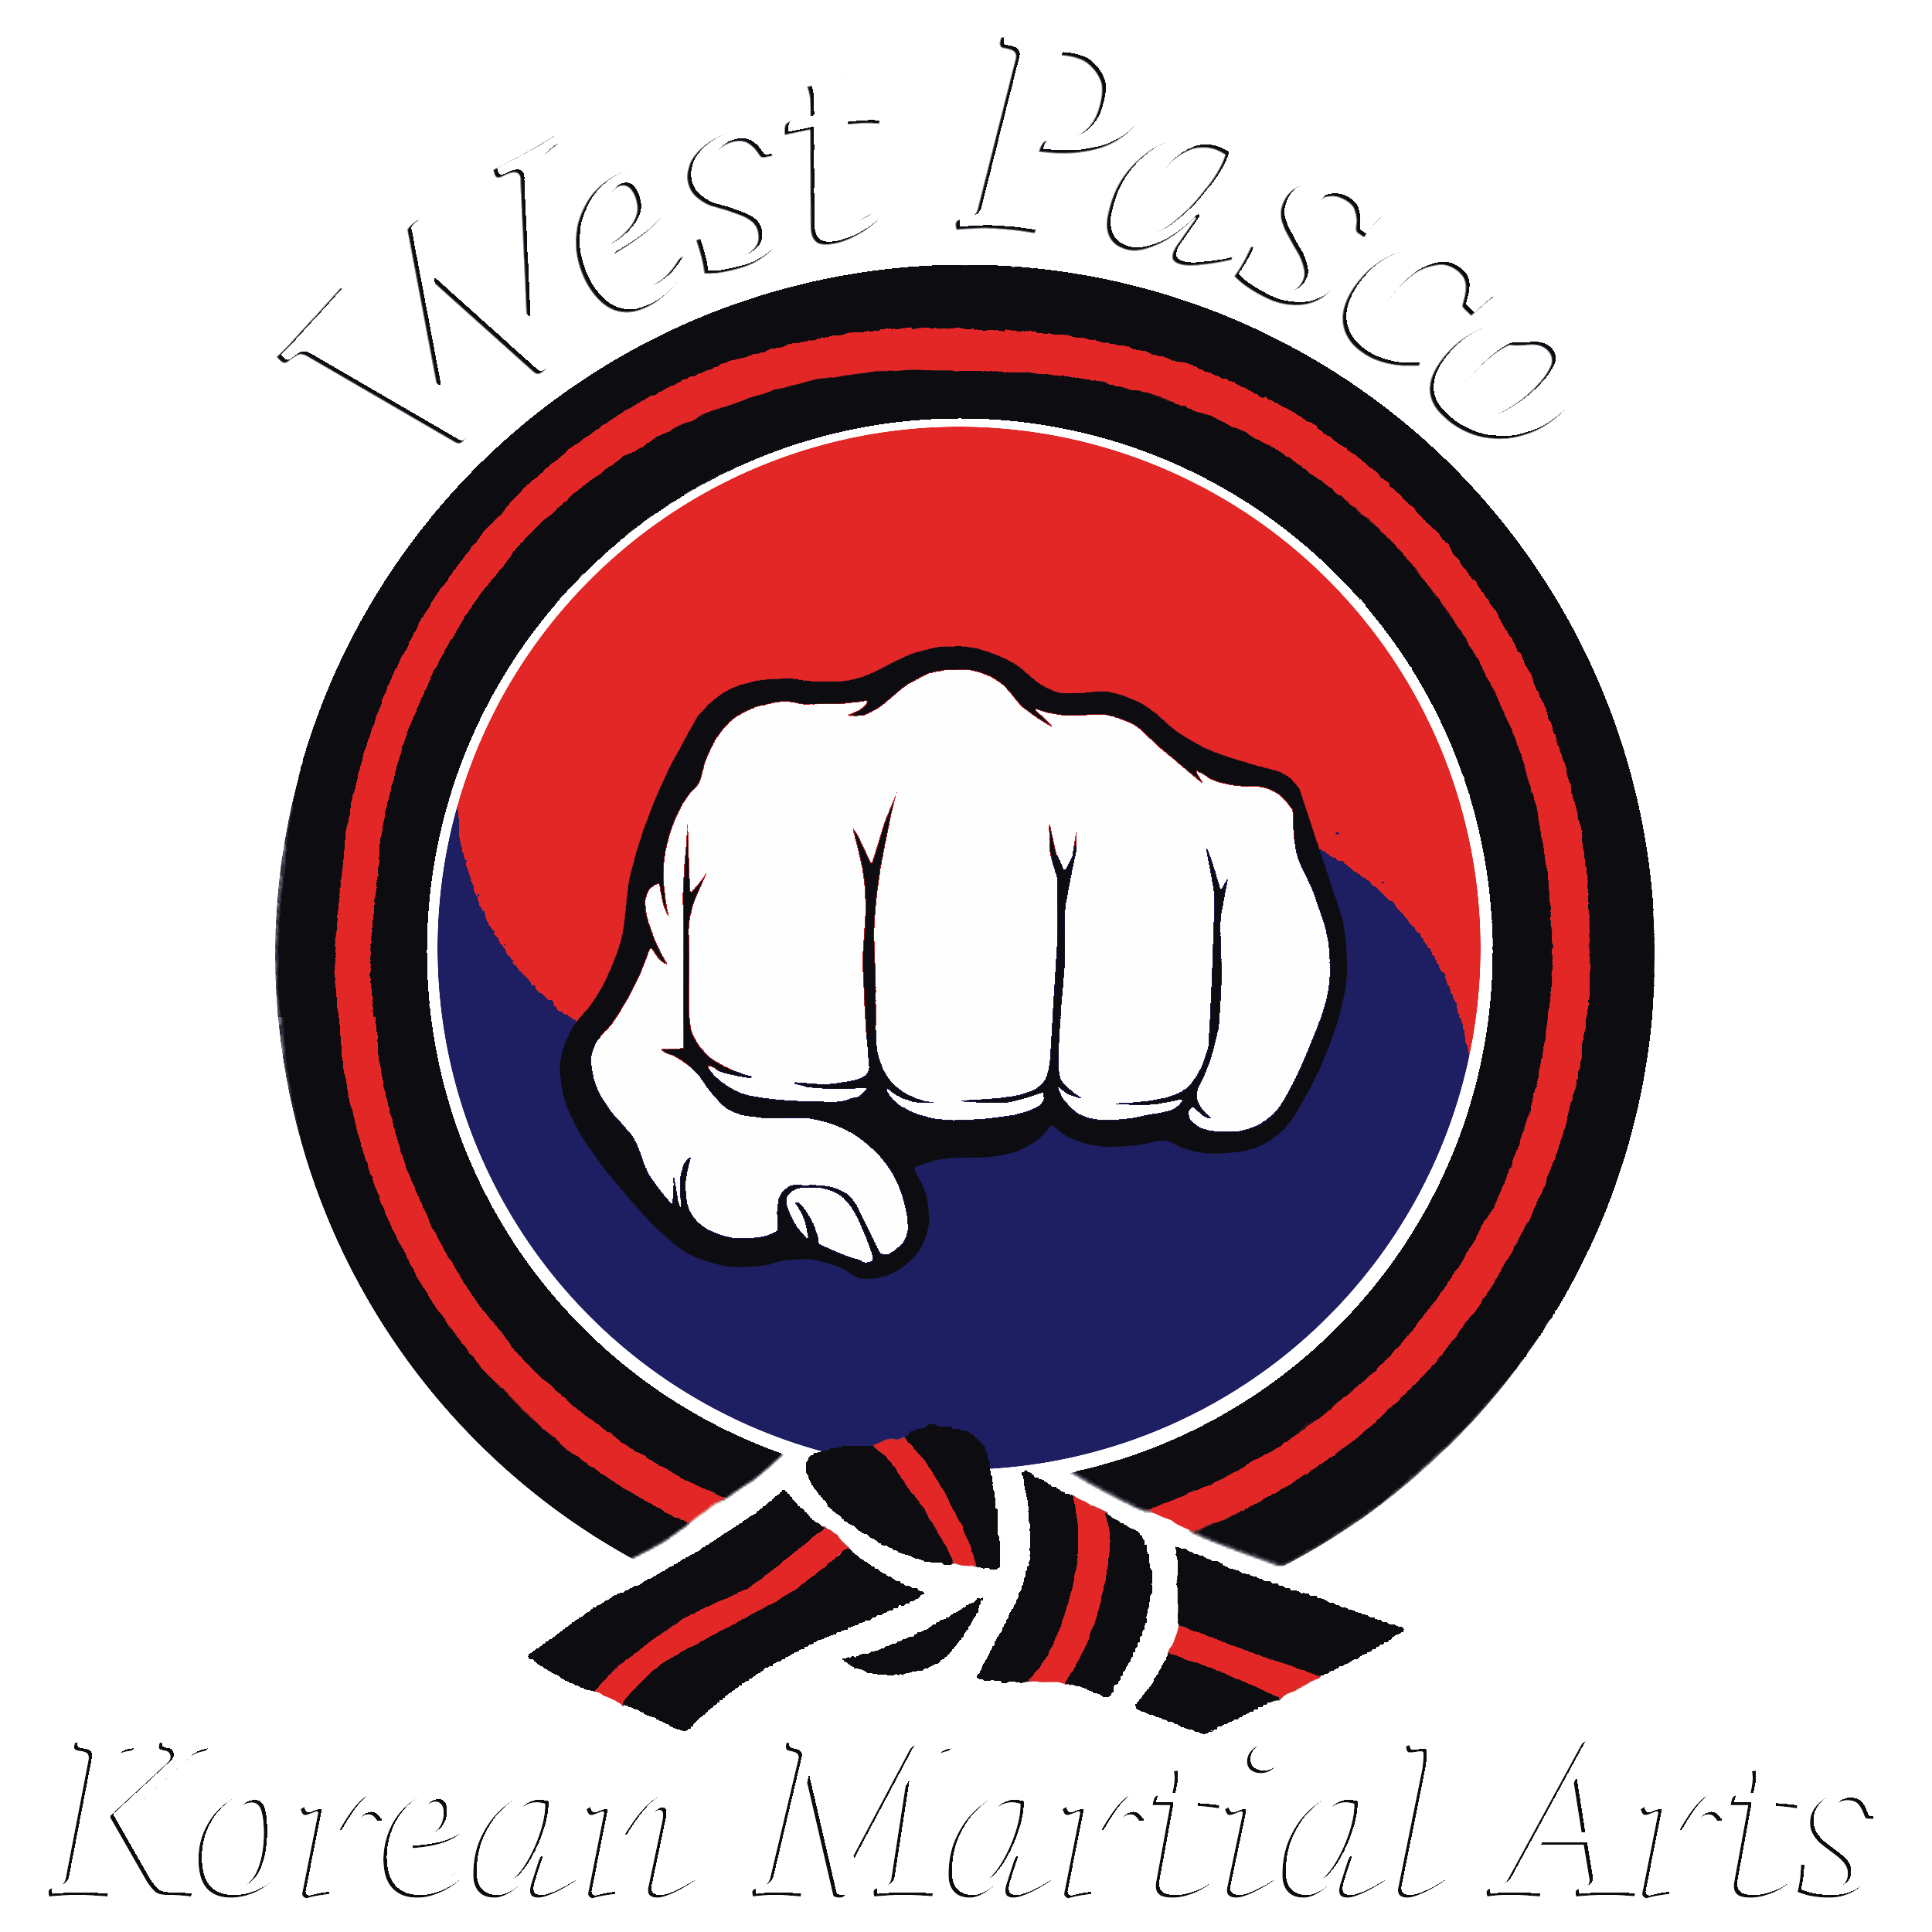 West Pasco KMA Logo